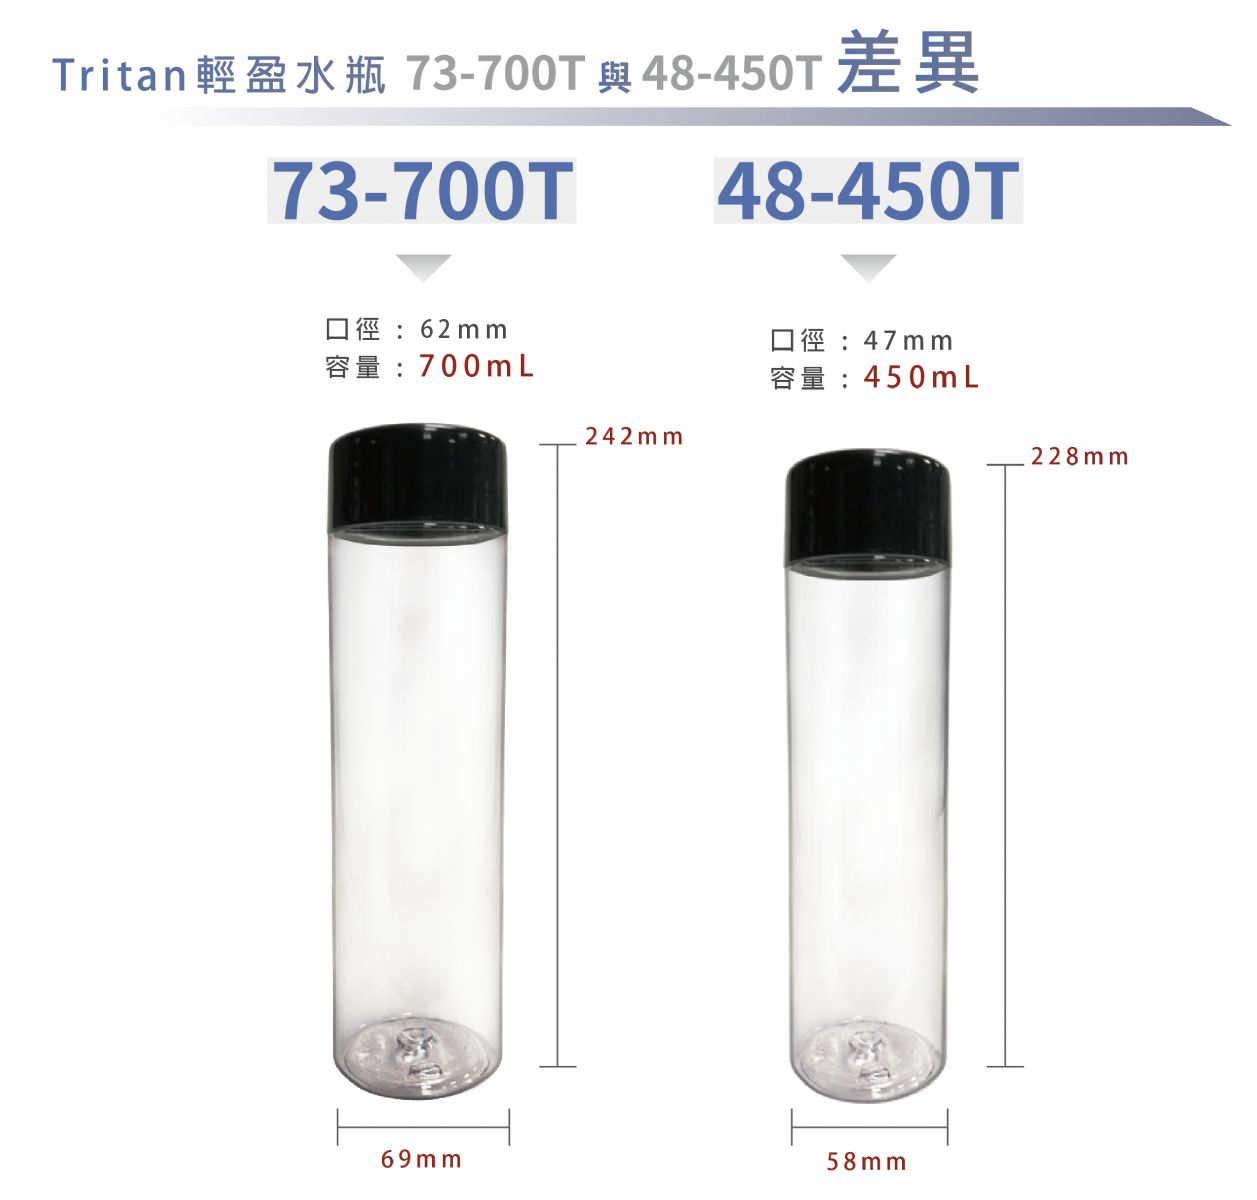 Tritan-73-700T_.Tritan-48-450_T